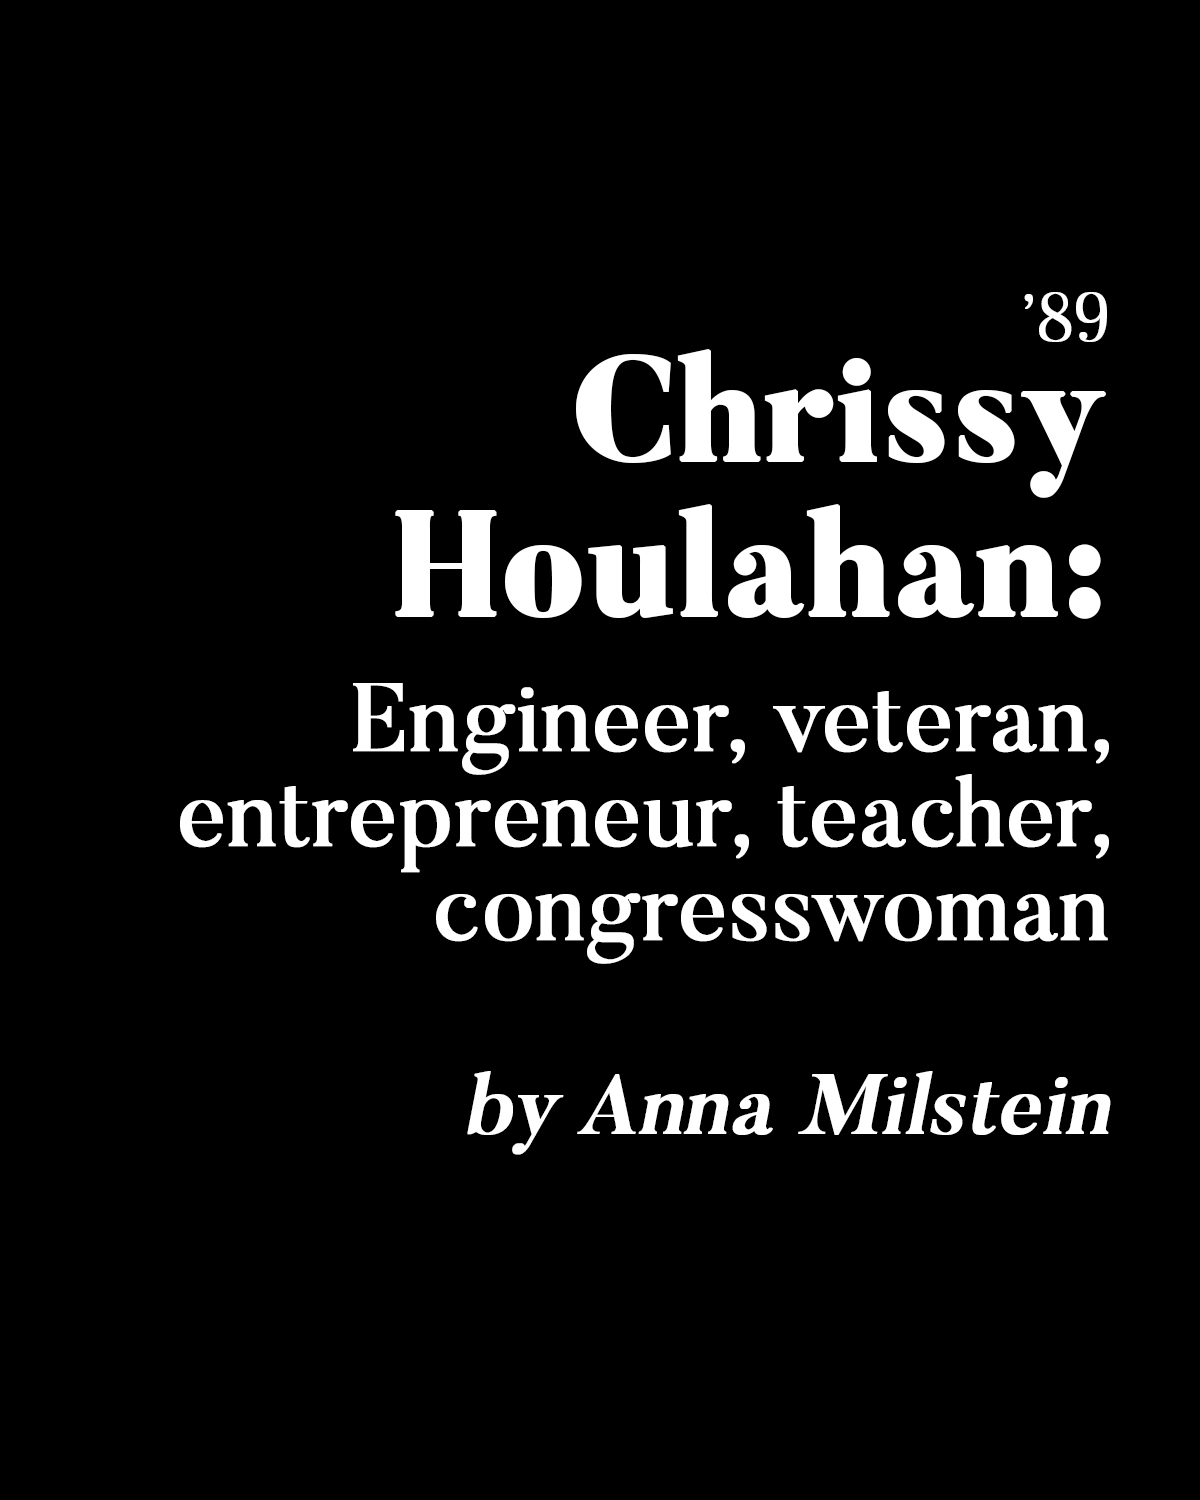 Chrissy Houlahan ’89: Engineer, veteran, entrepreneur, teacher, congresswoman